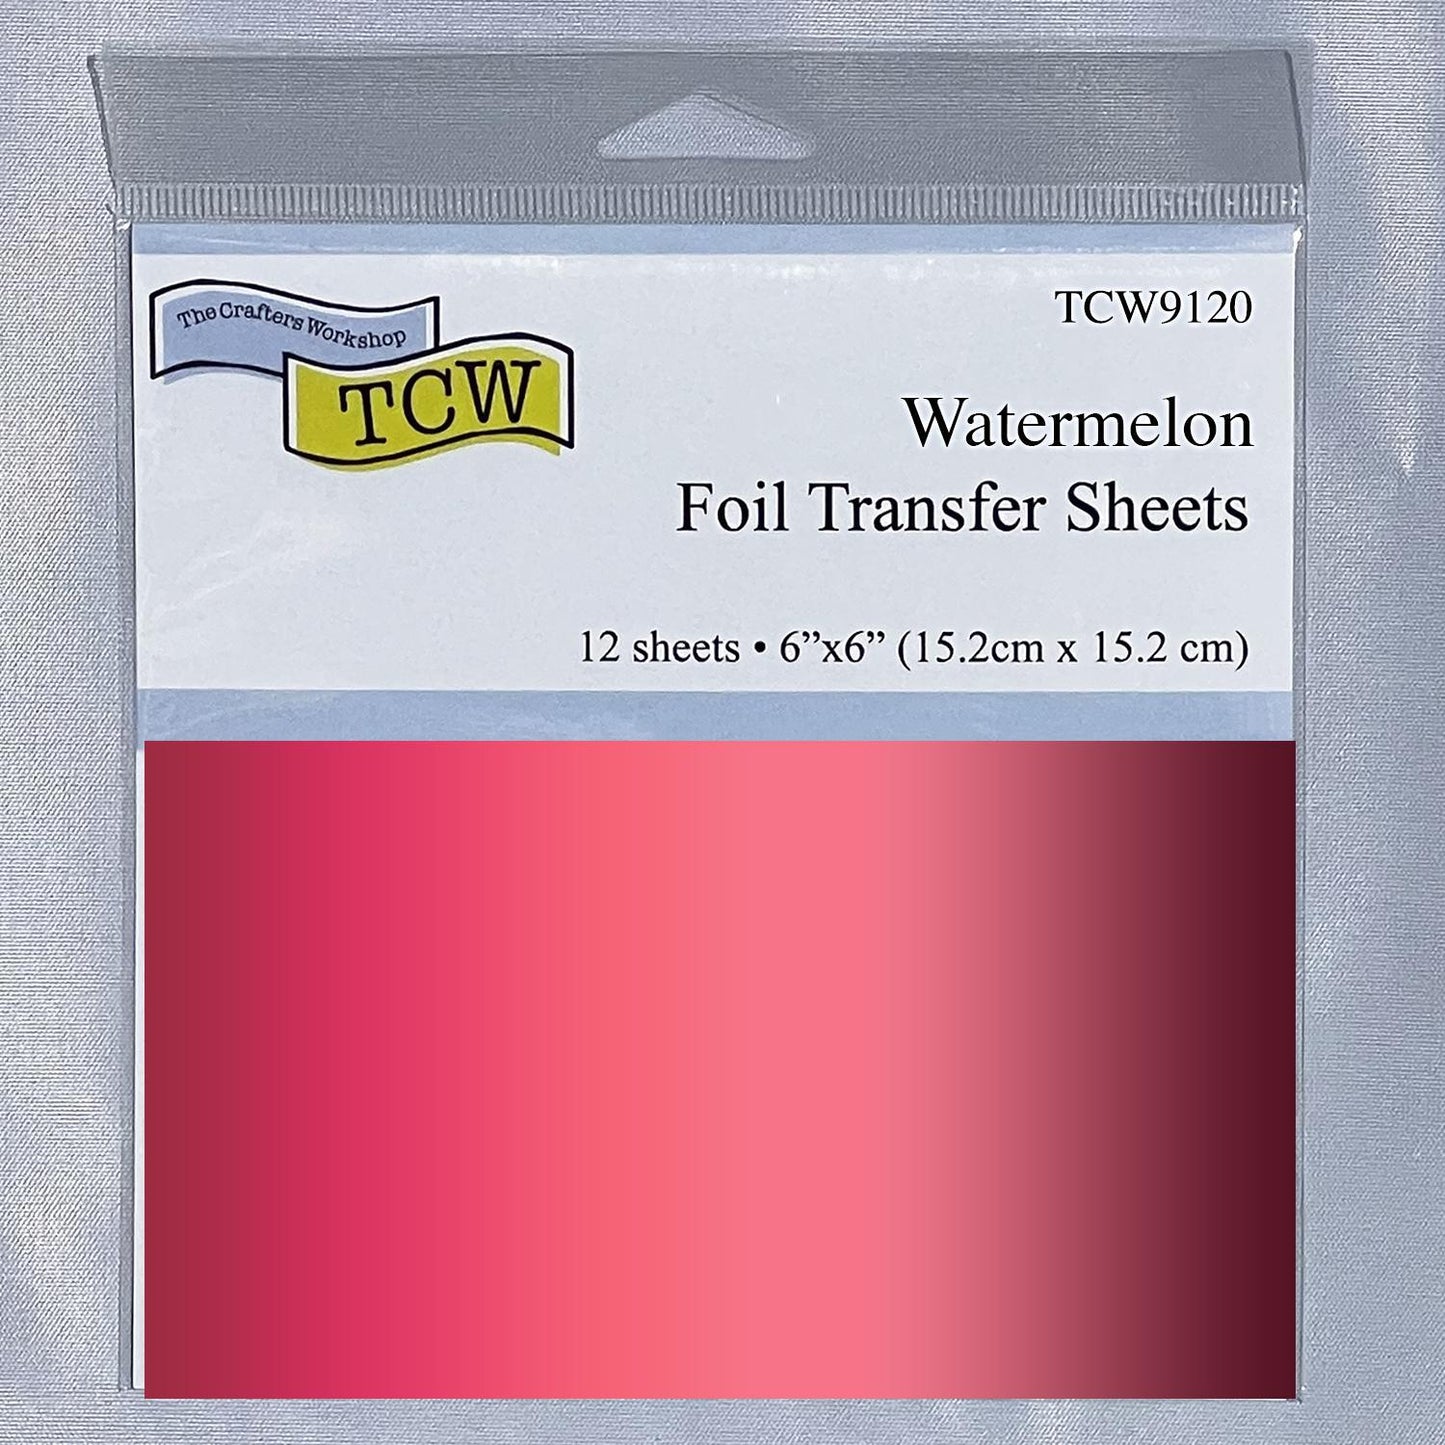 TCW9100 Foil Transfer Sheets 6x6 - Watermelon